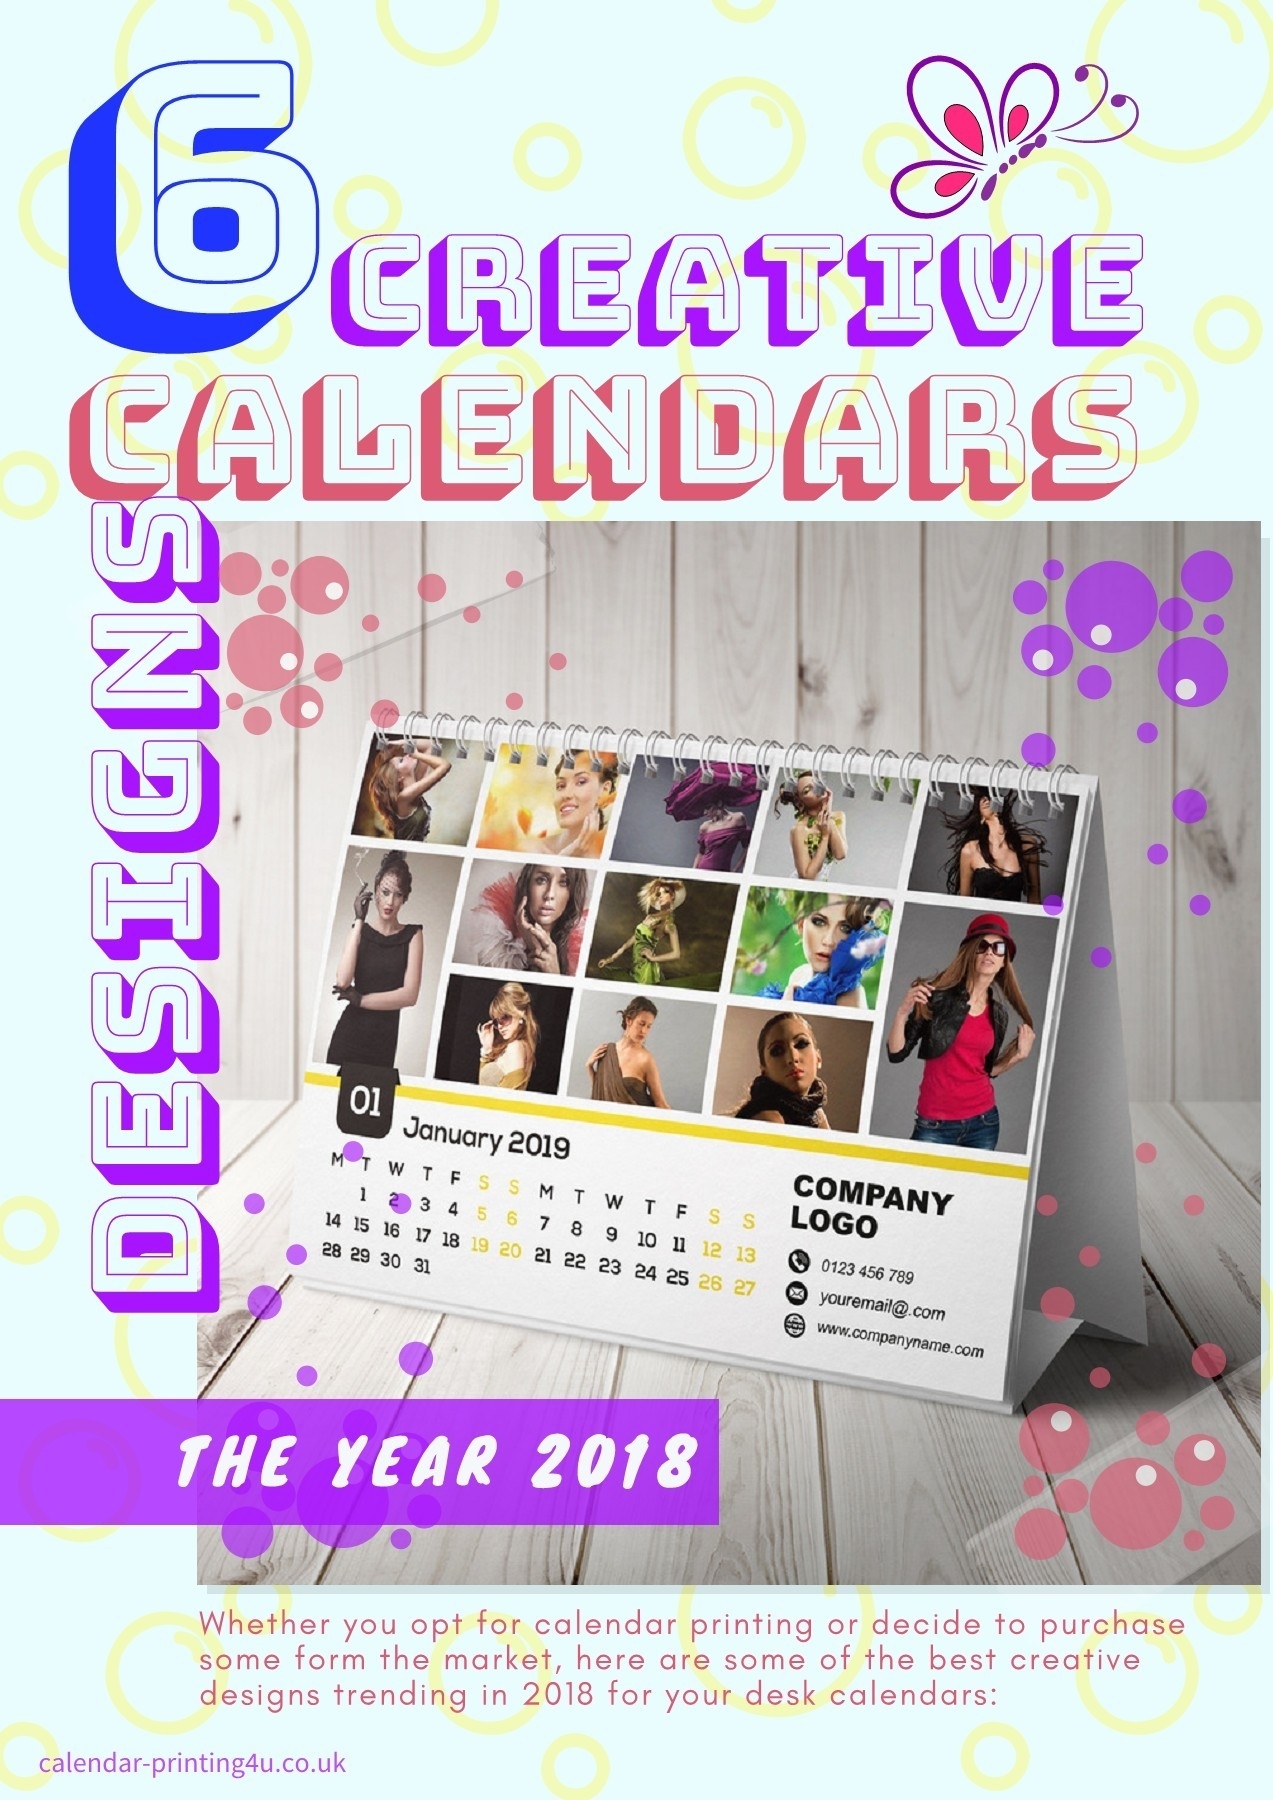 6 Creative Calendar Design Ideas For Your Desk For The Year 2019